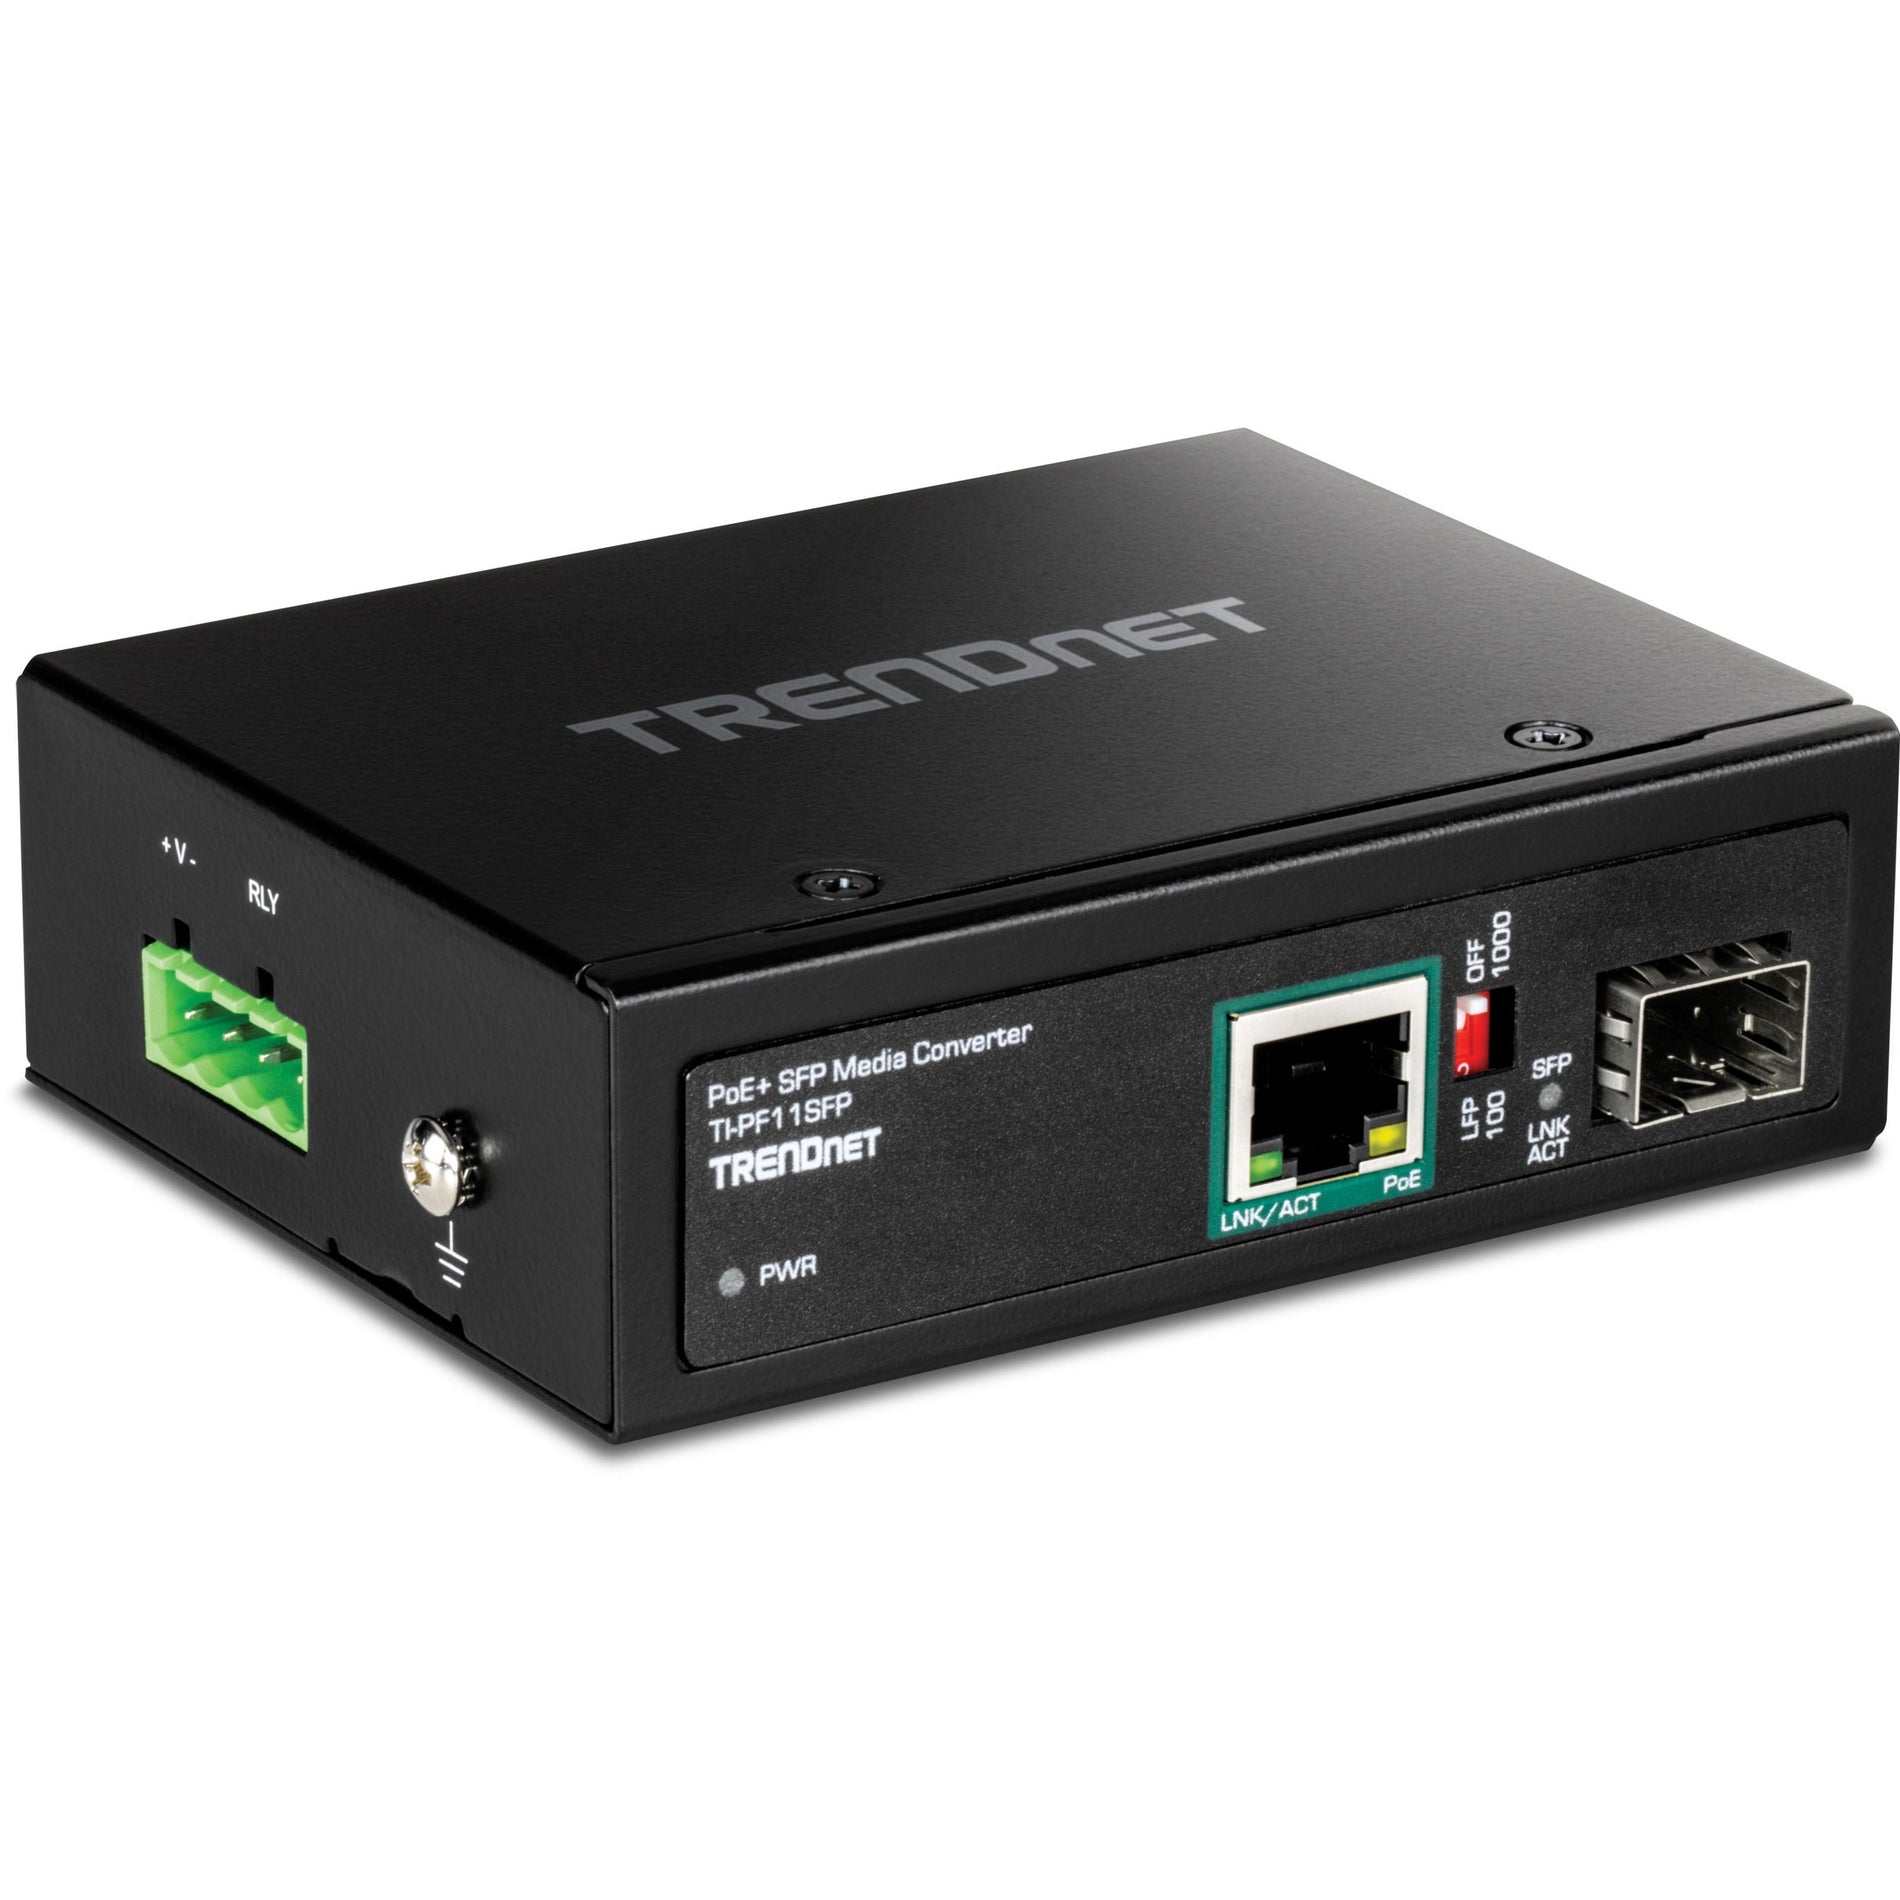 TRENDnet TI-PF11SFP Hardened Industrial SFP to Gigabit PoE+ Media Converter, Reliable Network Connectivity Solution